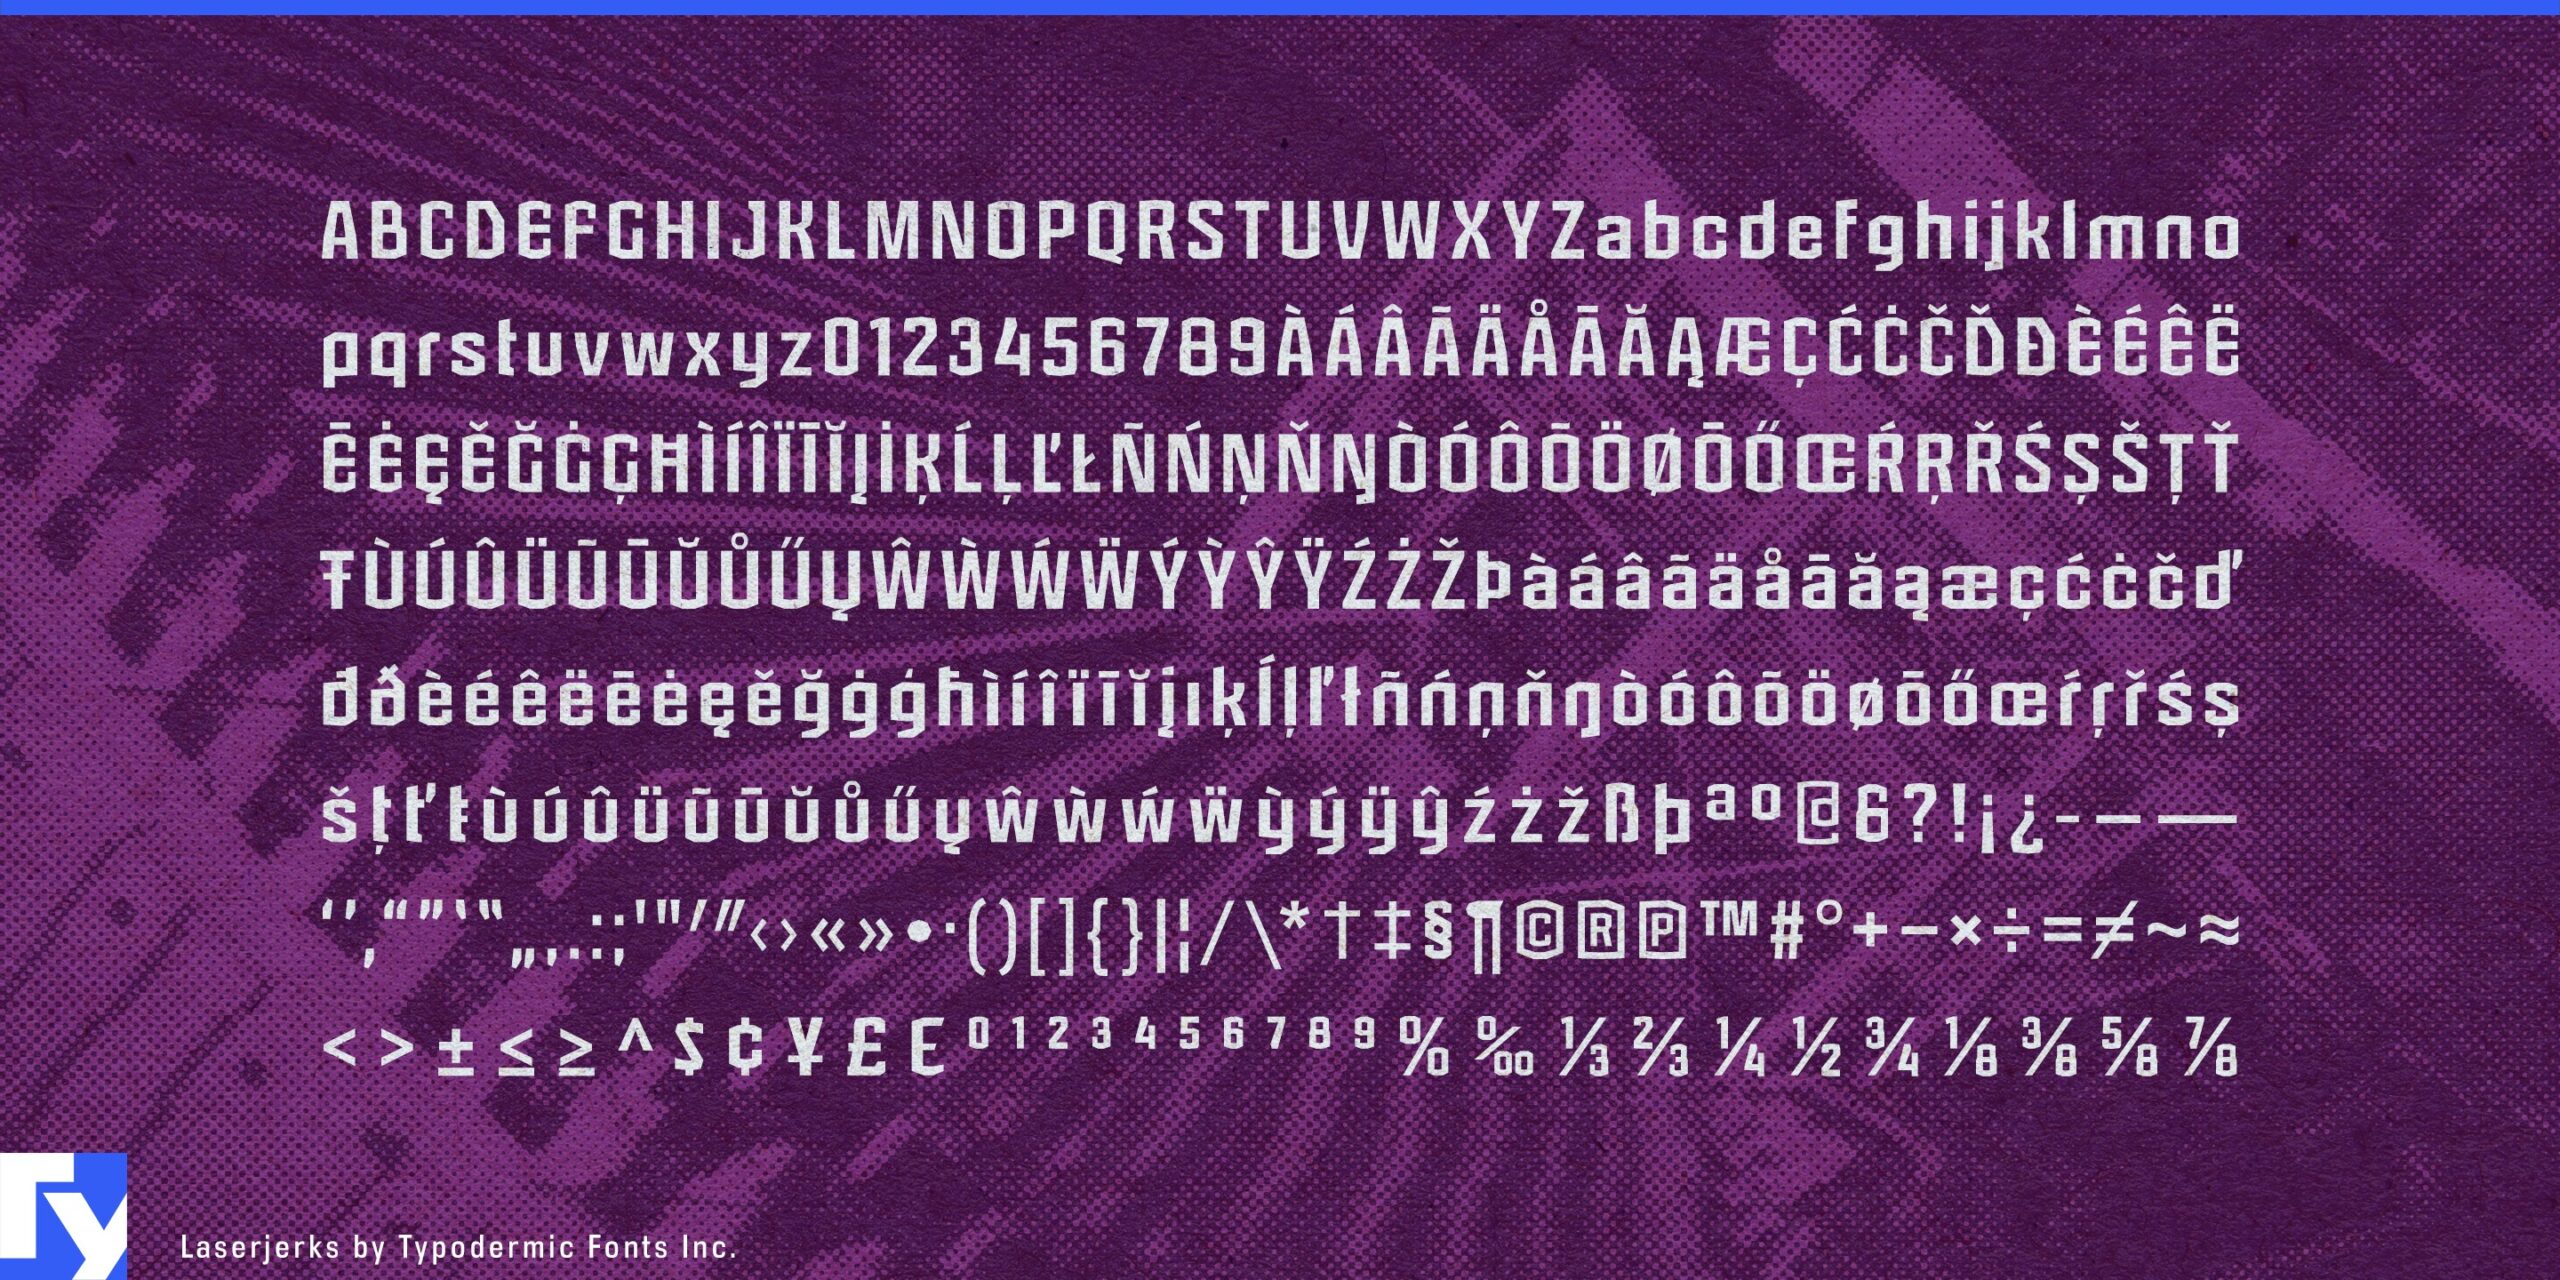 Compressed Alien Alphabets: Laserjerks Typeface Makes a Statement